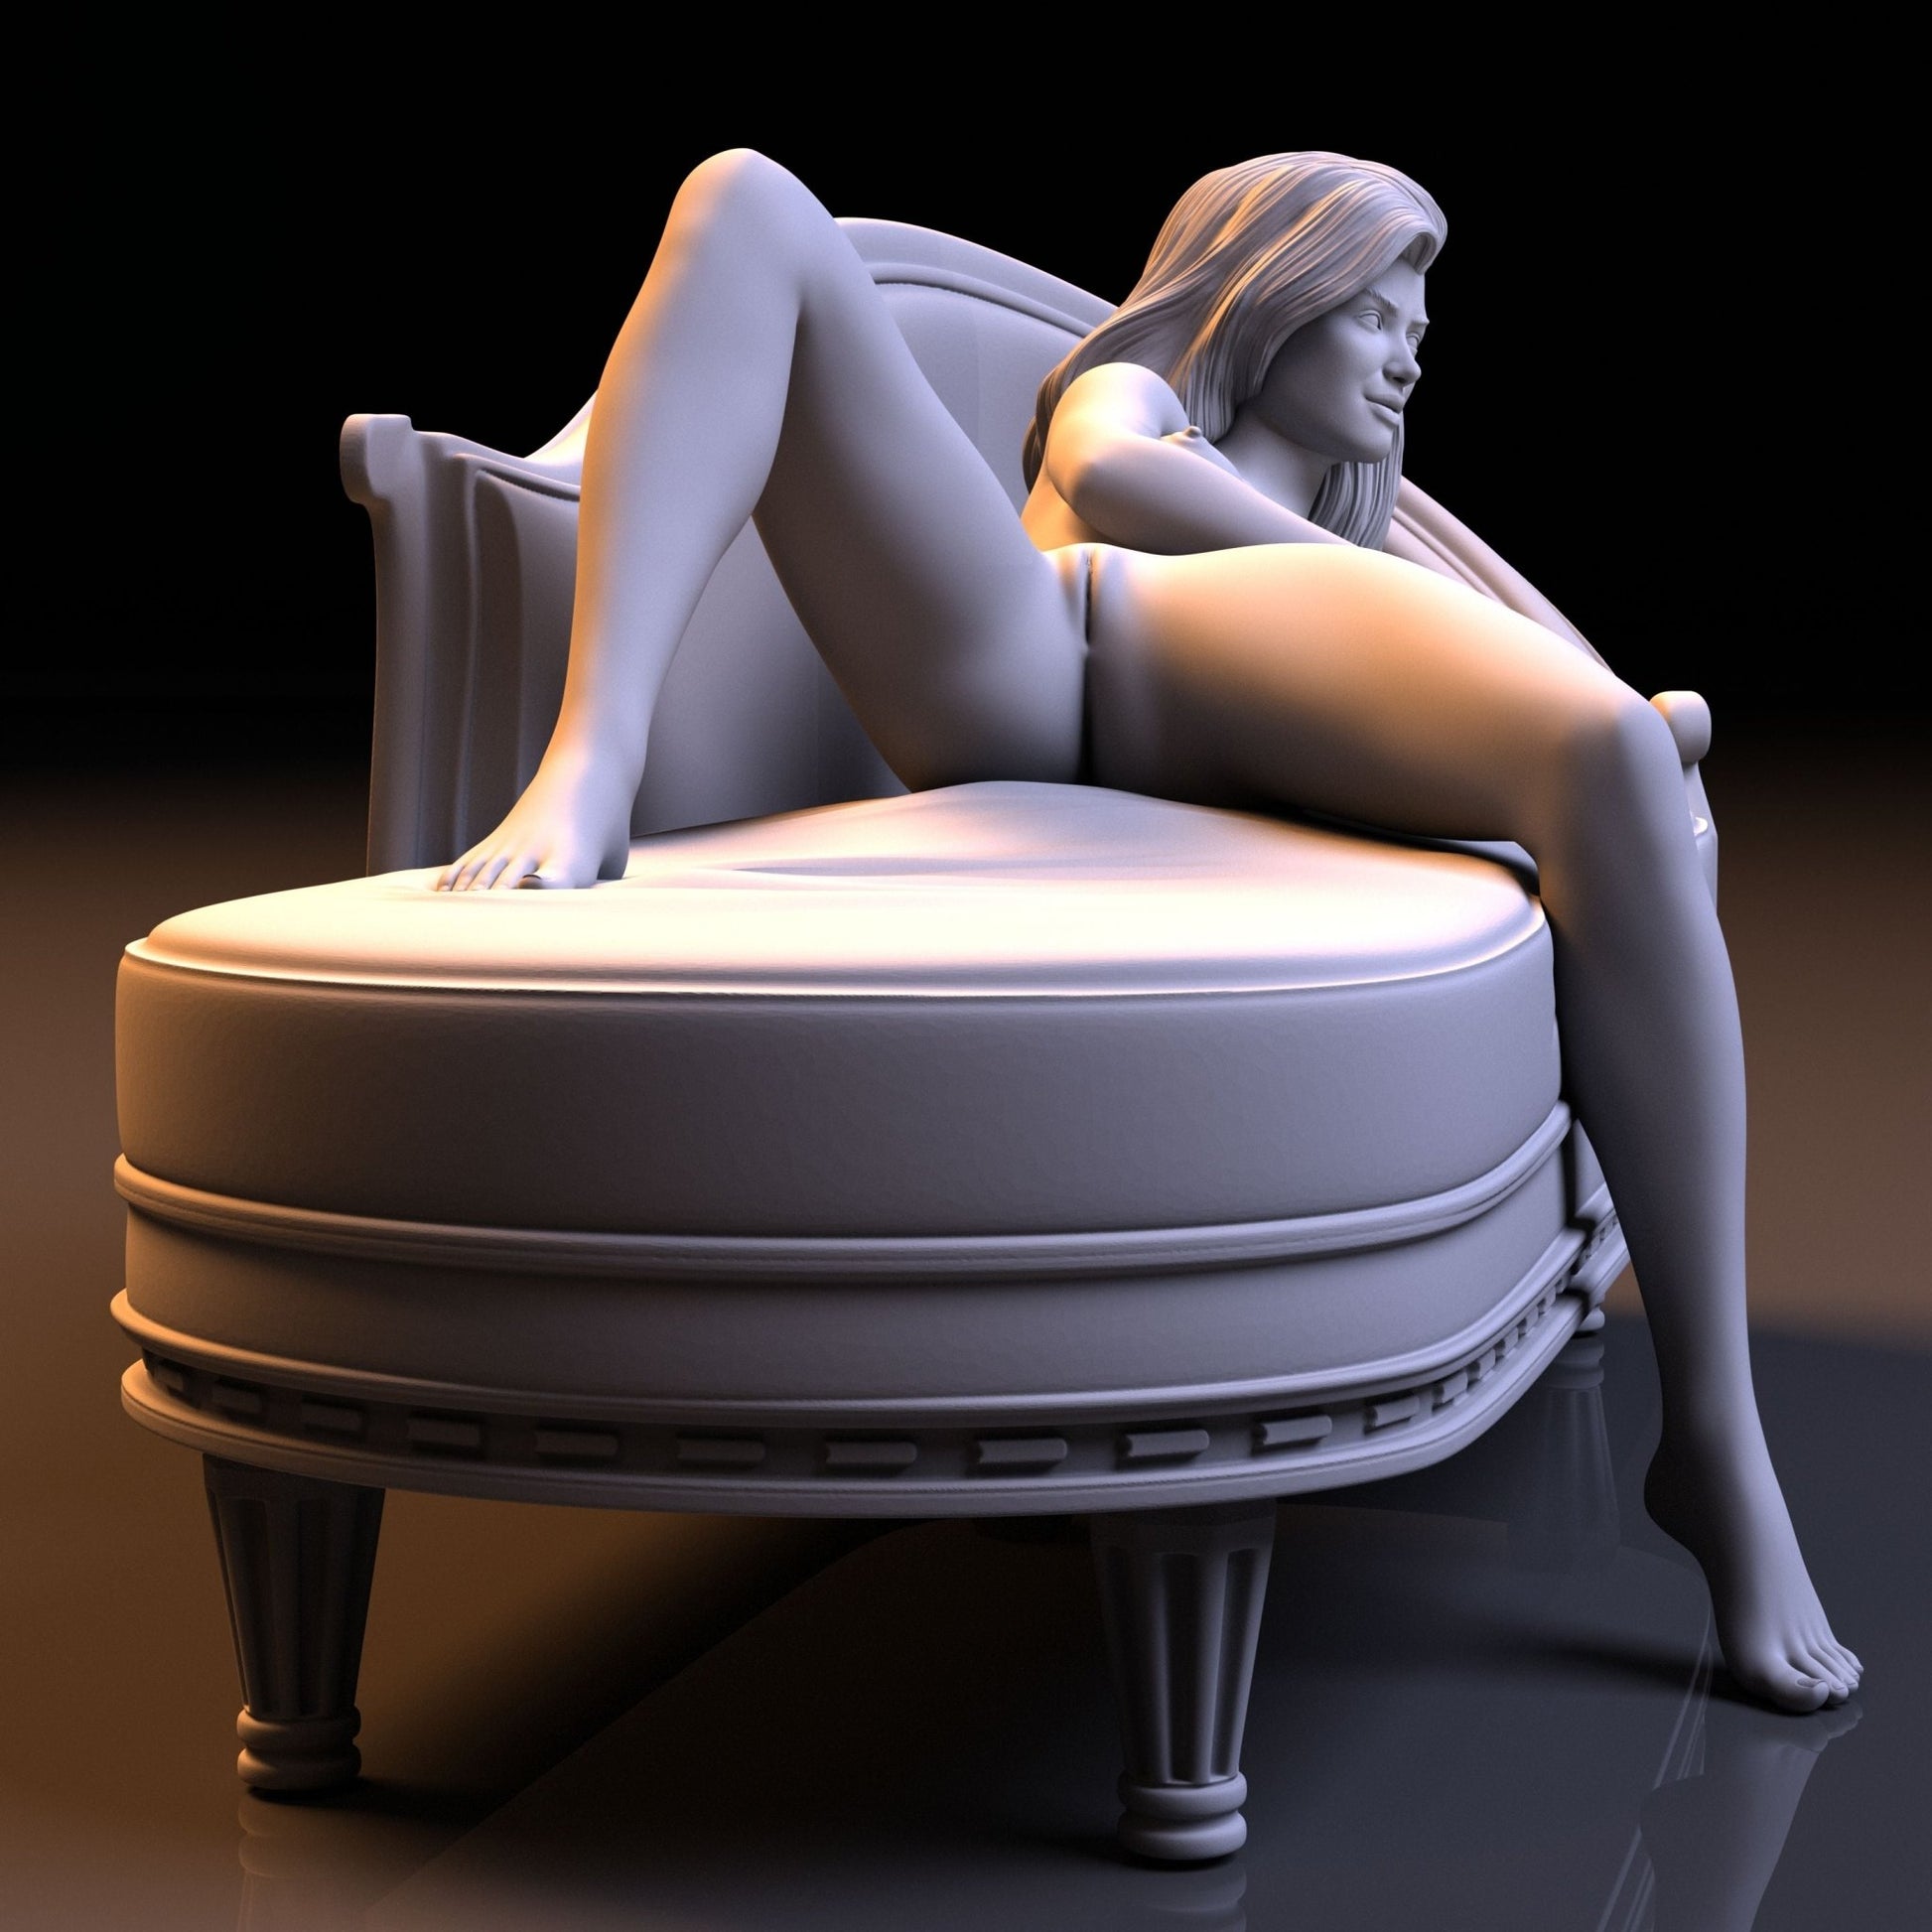 Sofa girl 2 | 3D Printed | Fanart | Unpainted | NSFW Version | Figurine